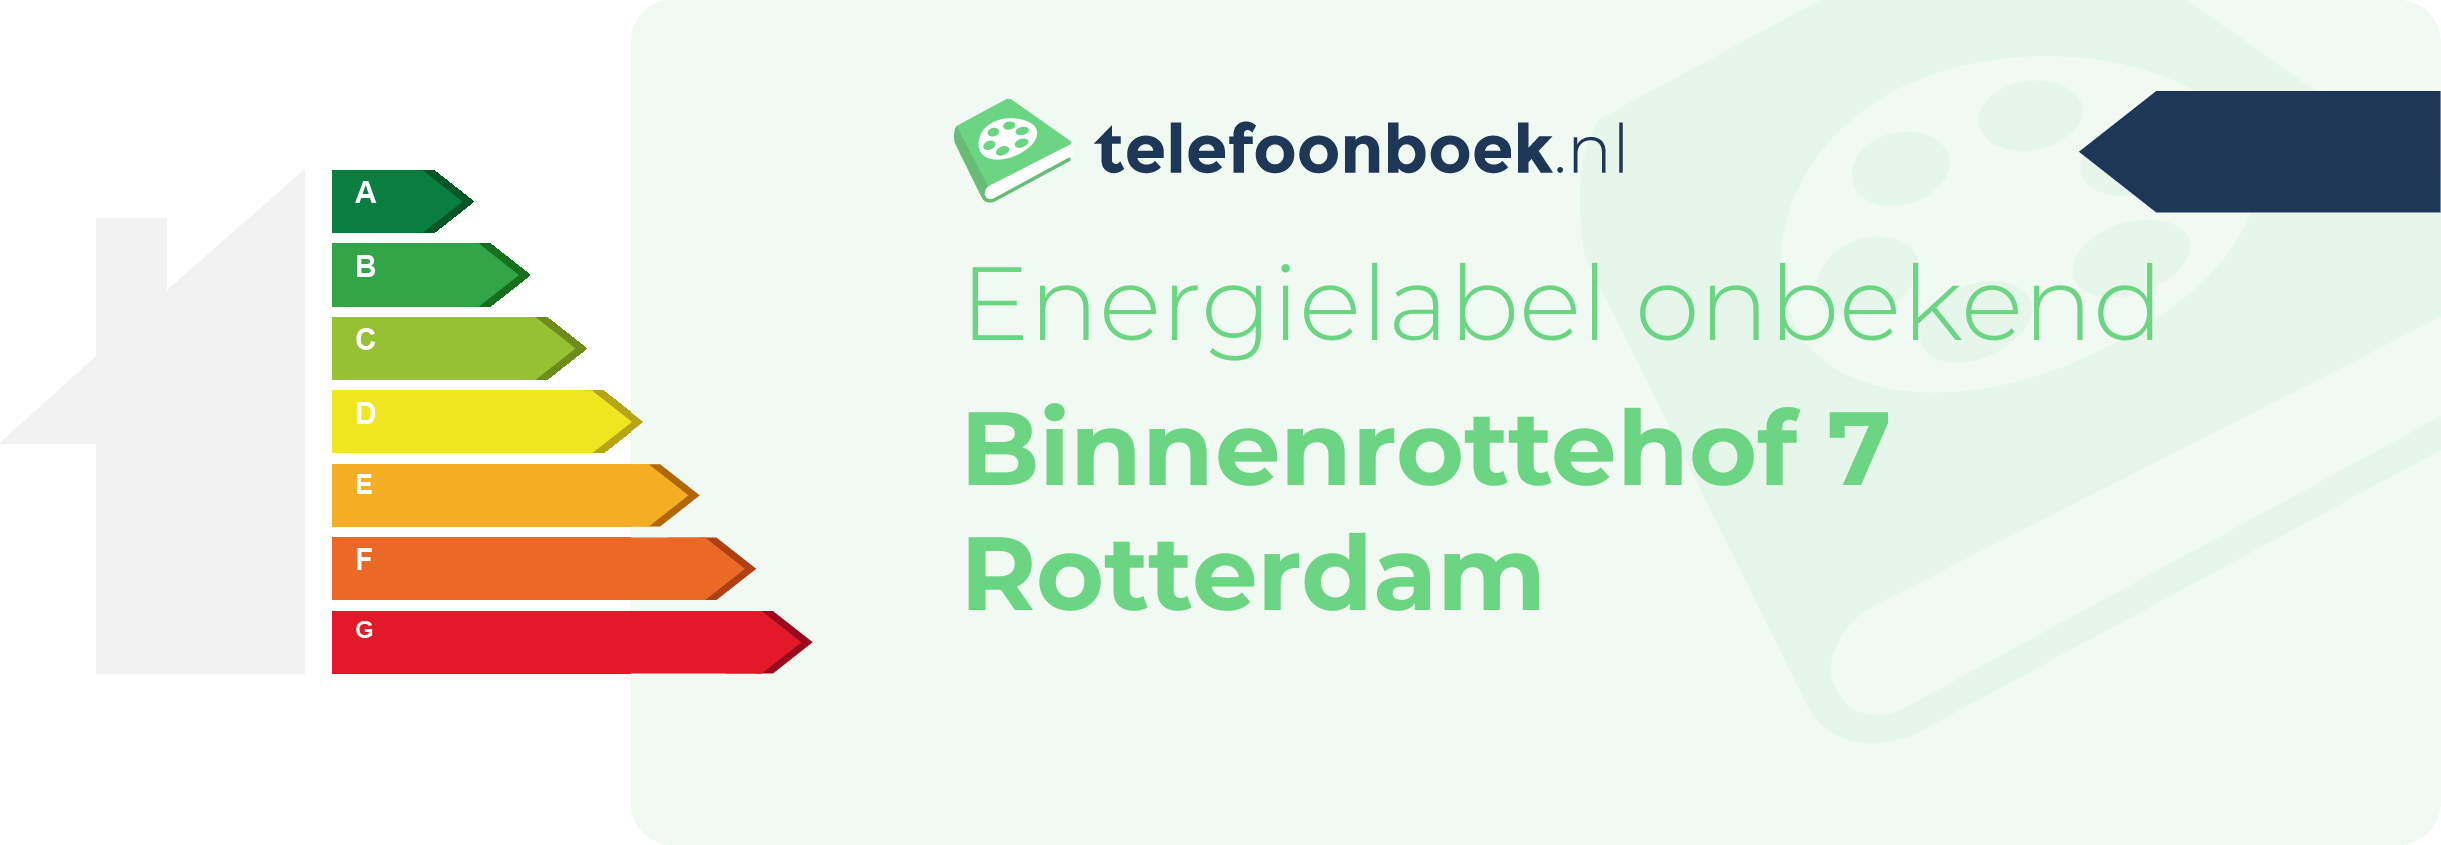 Energielabel Binnenrottehof 7 Rotterdam